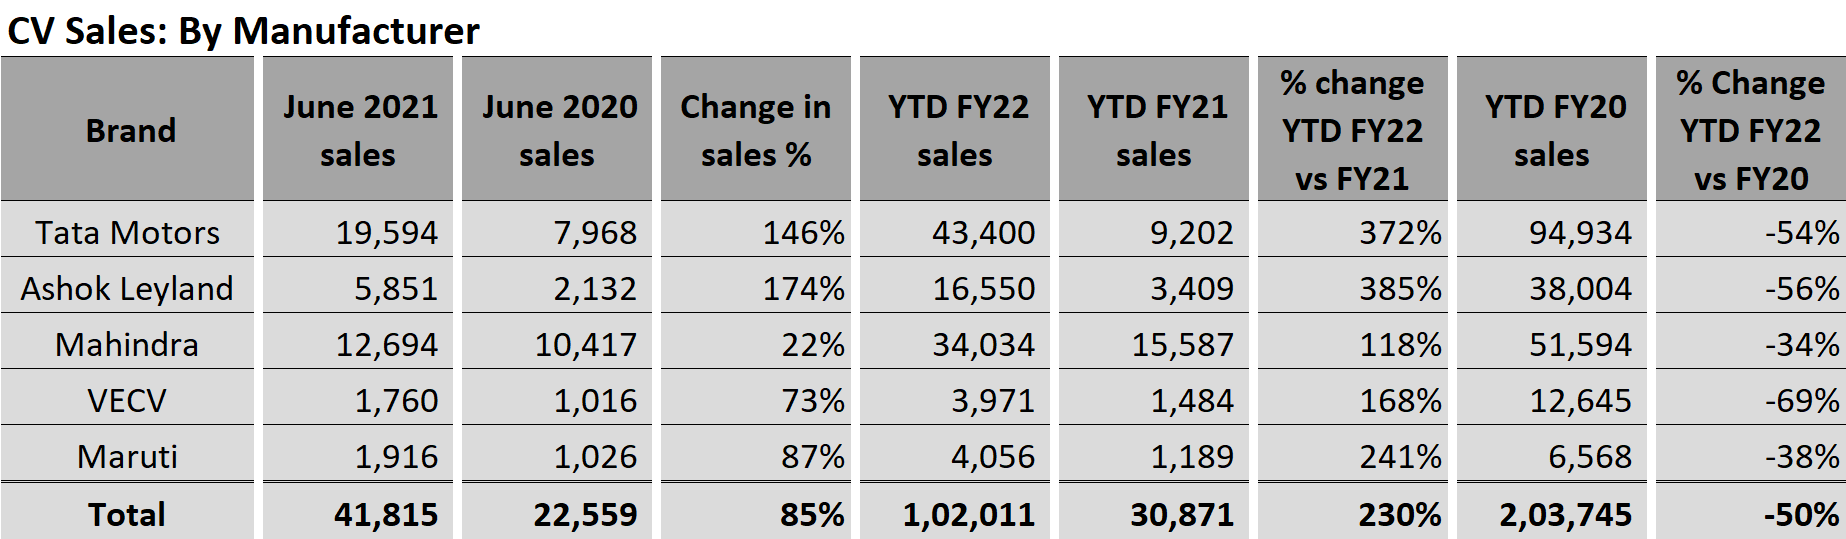 CV Sales grow by 230% in Q1 FY22